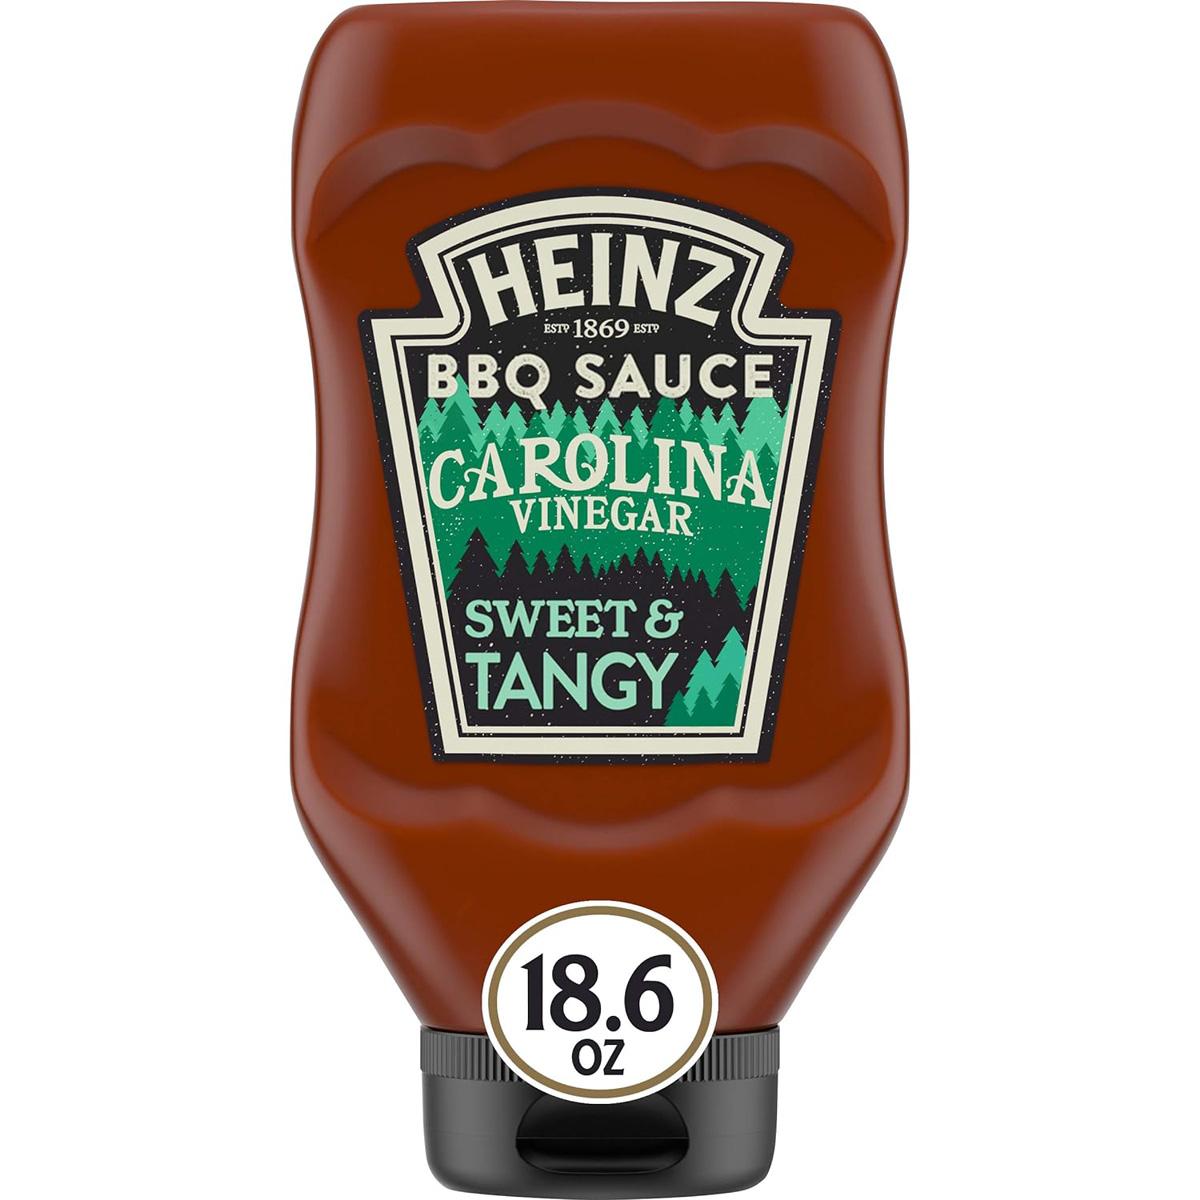 Heinz Sweet Tangy BBQ Sauce Carolina Vinegar for $2.61 Shipped